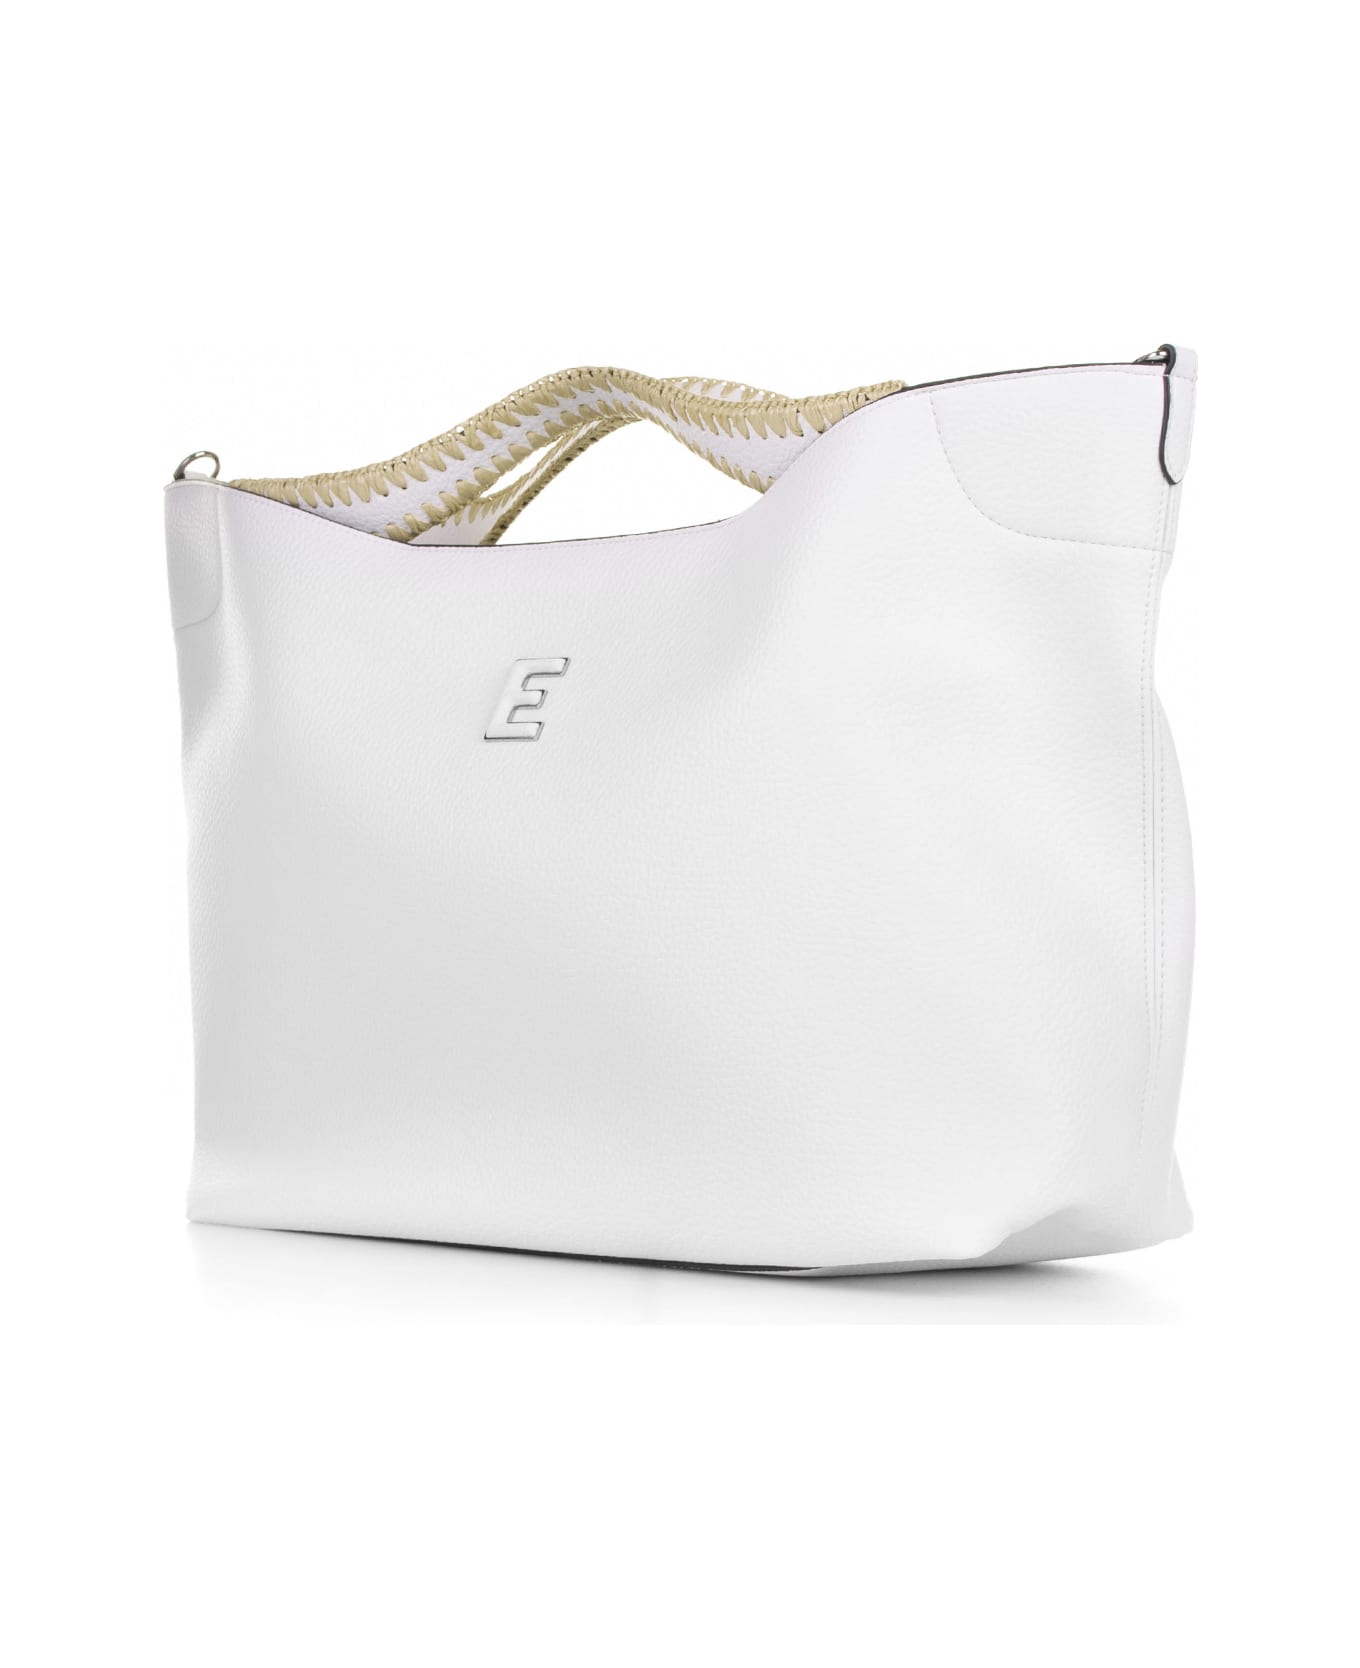 Ermanno Scervino Rachele Large White Leather Handbag - BIANCO トートバッグ